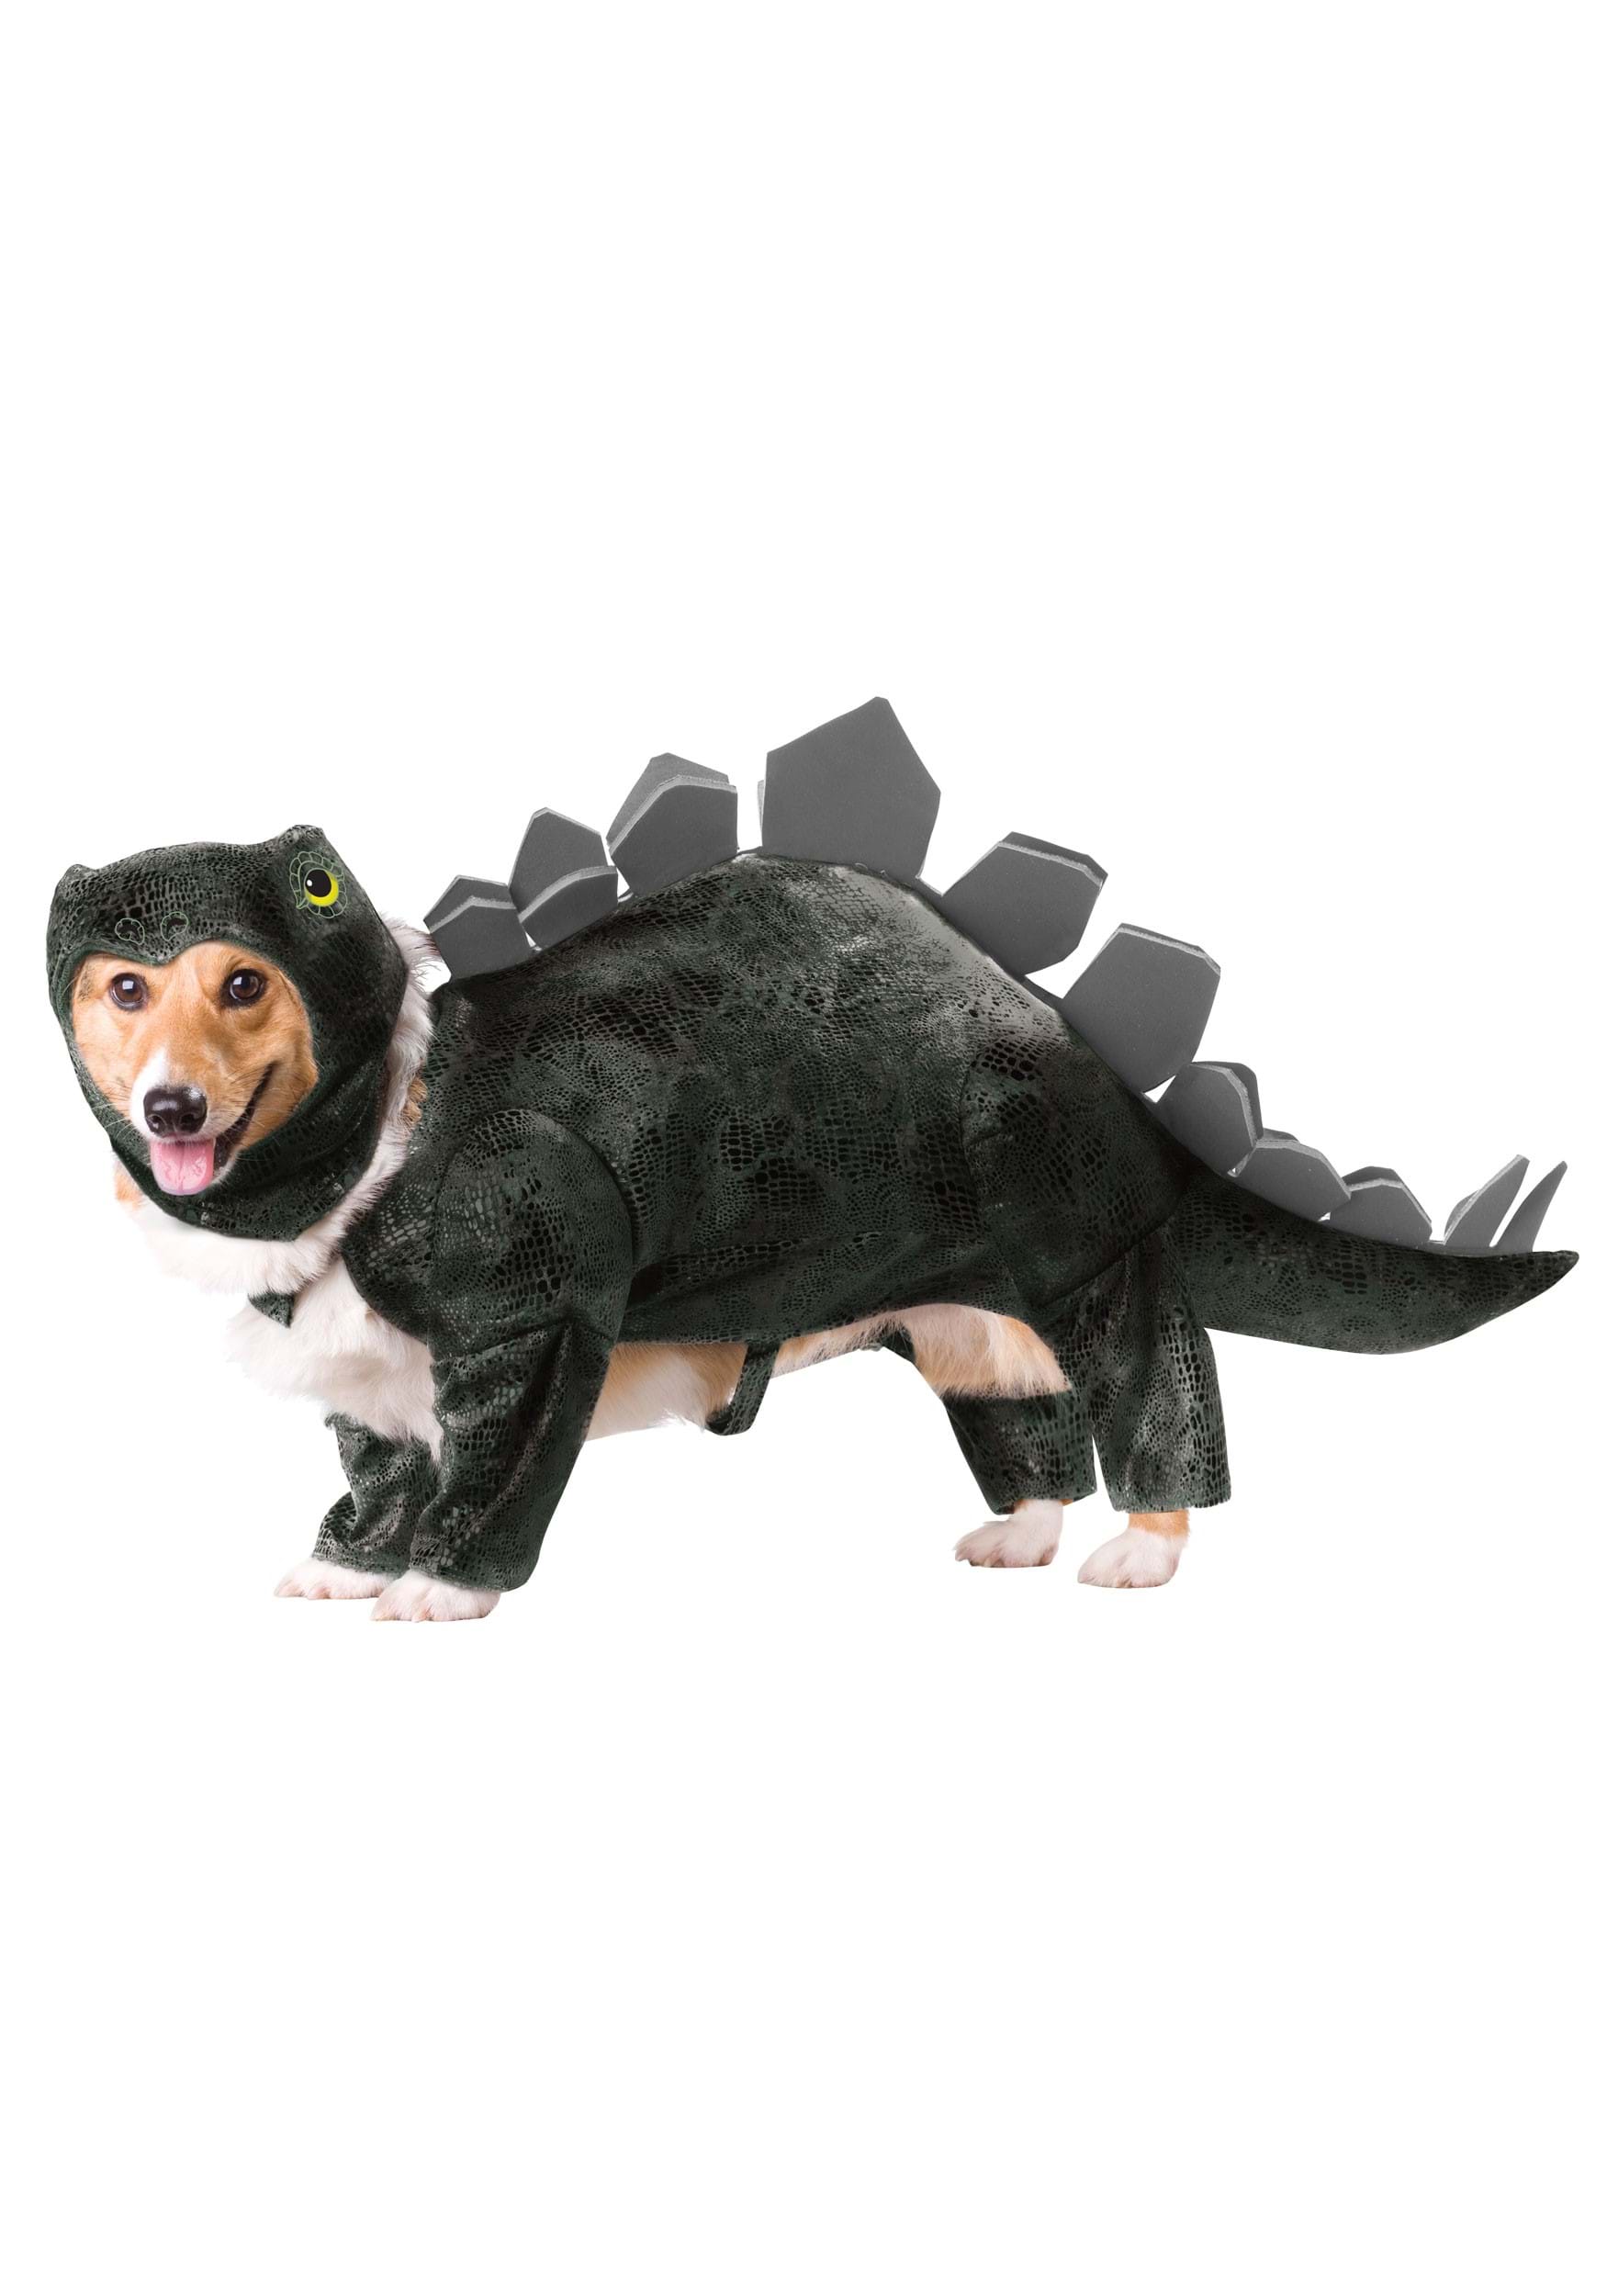 https://images.fun.com/products/41933/1-1/stegosaurus-dog-costume.jpg